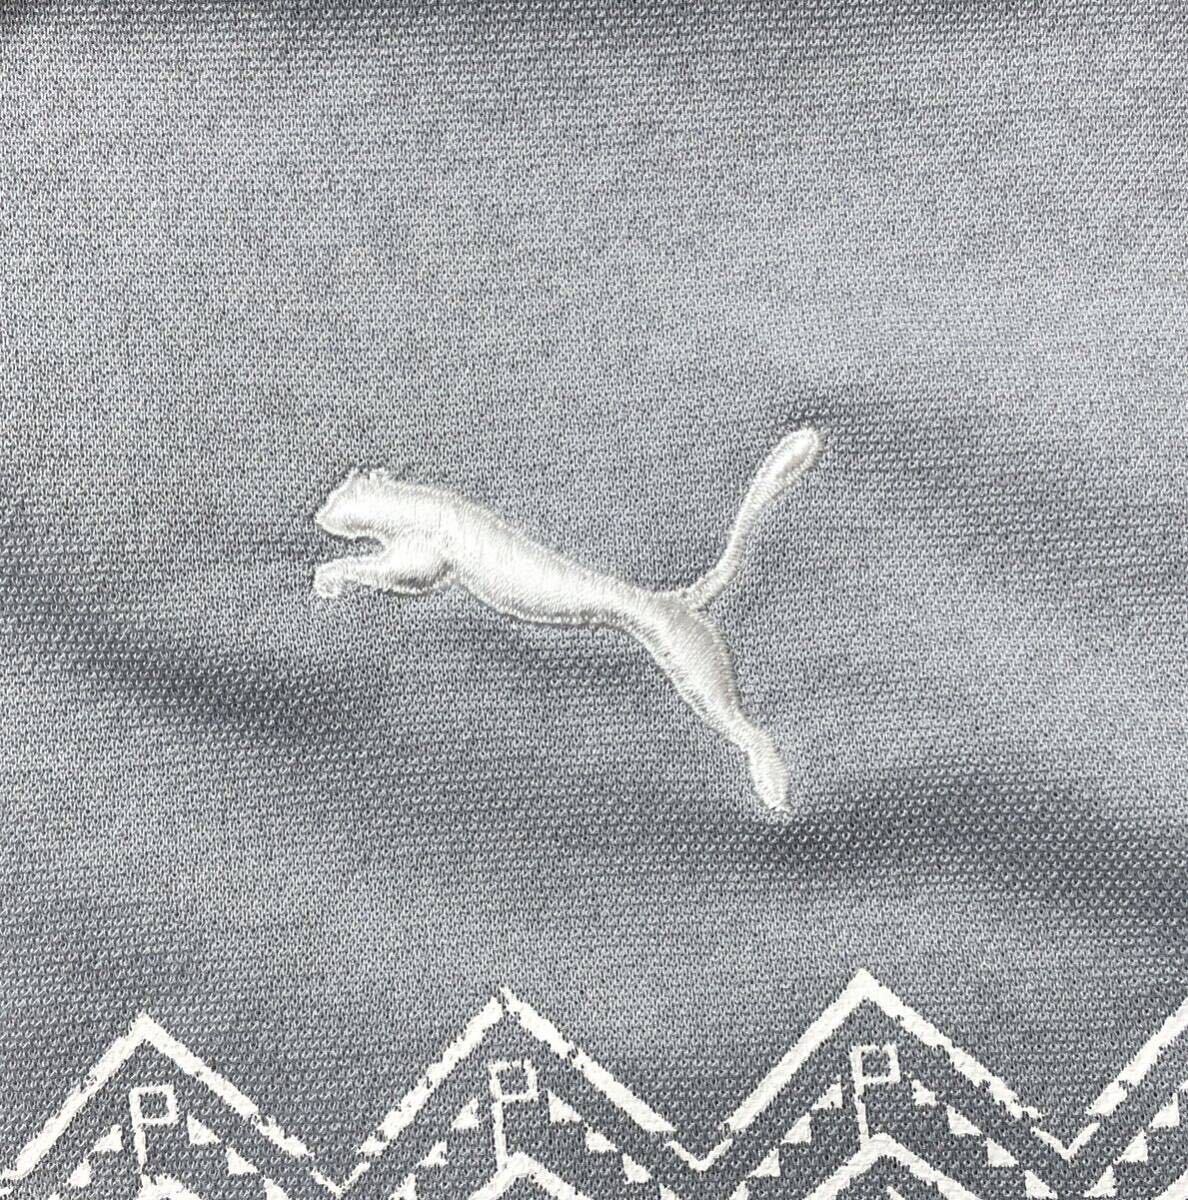  large size * PUMA GOLF Puma Golf * Logo embroidery neitib pattern short sleeves Golf polo-shirt light gray XL